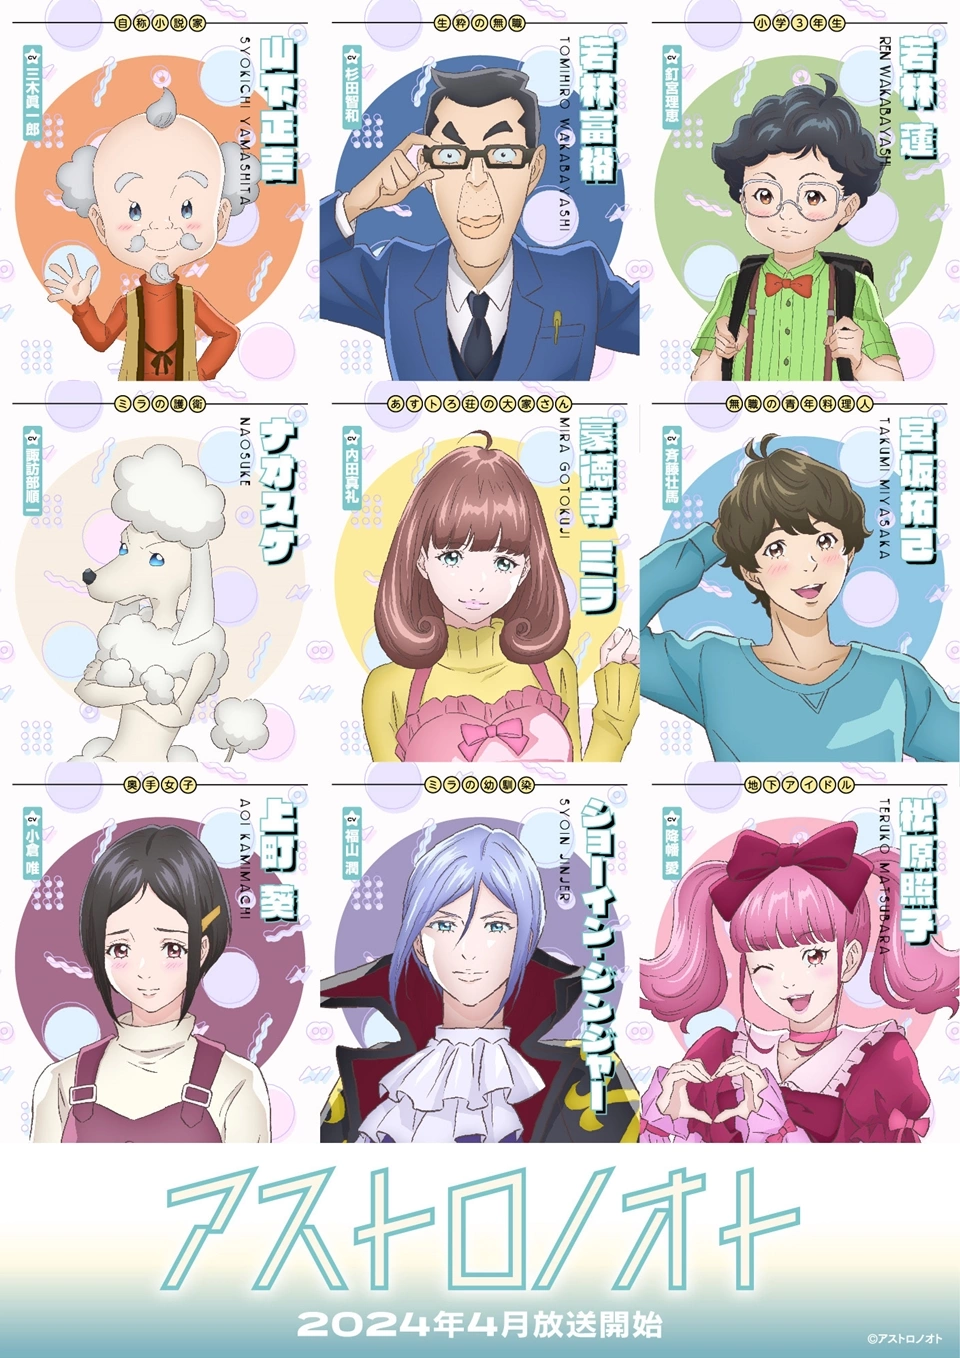 Astro Note Anime Key Visuals